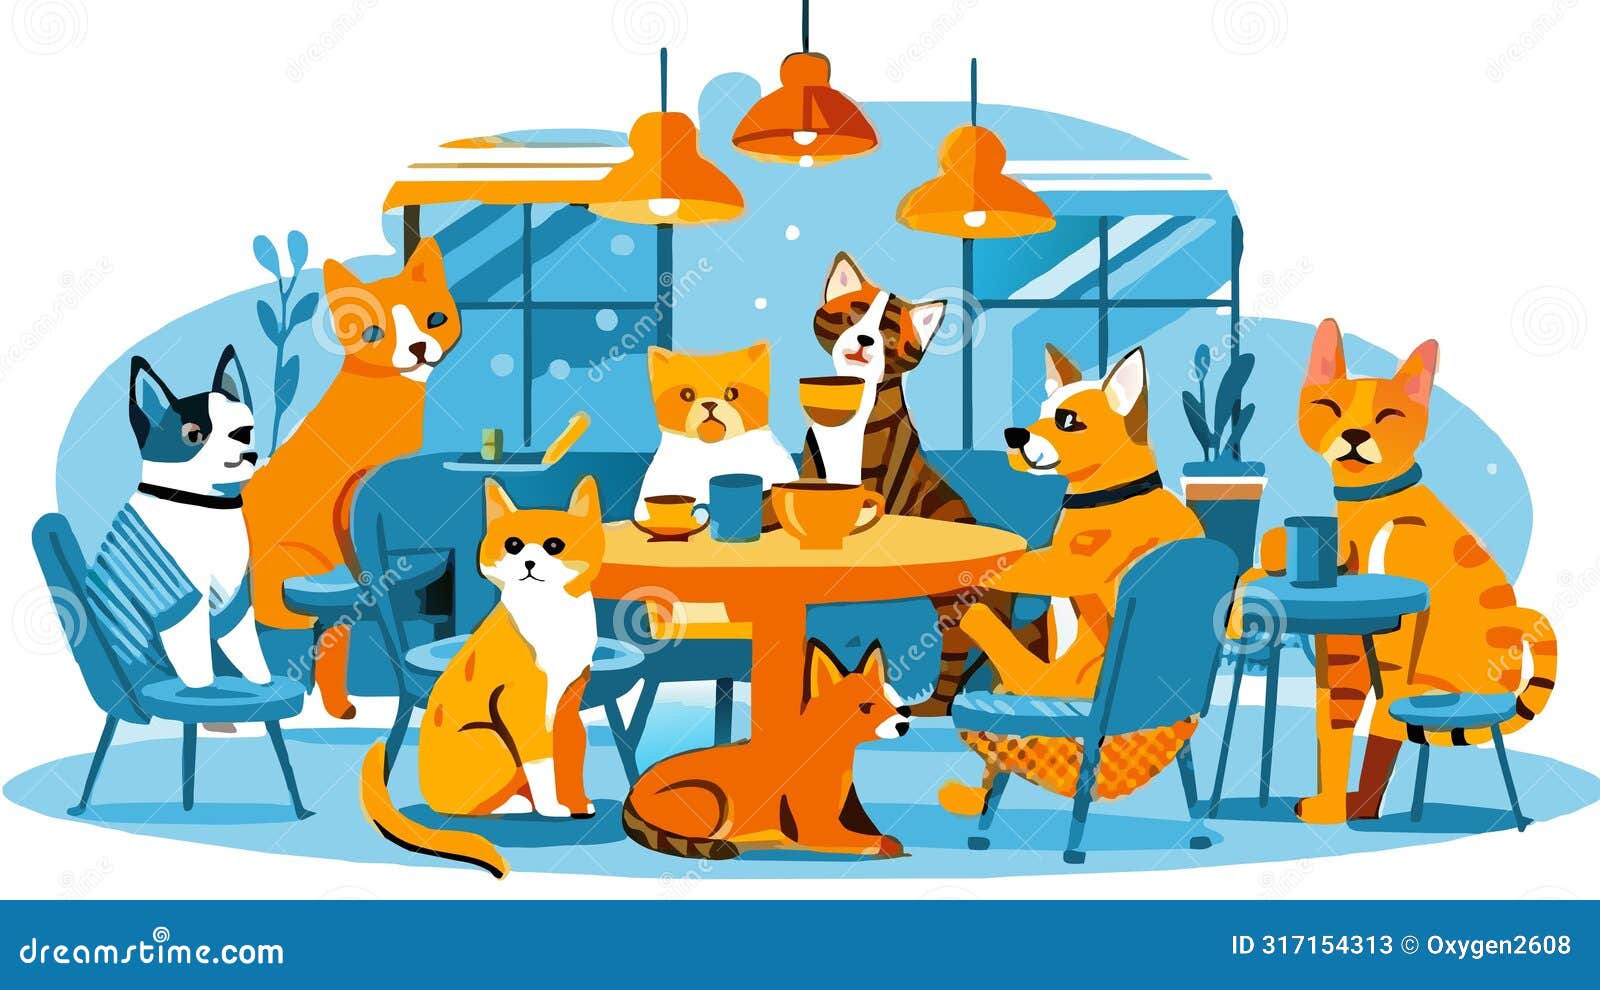 funky feline friends enjoying a cozy cafe gathering